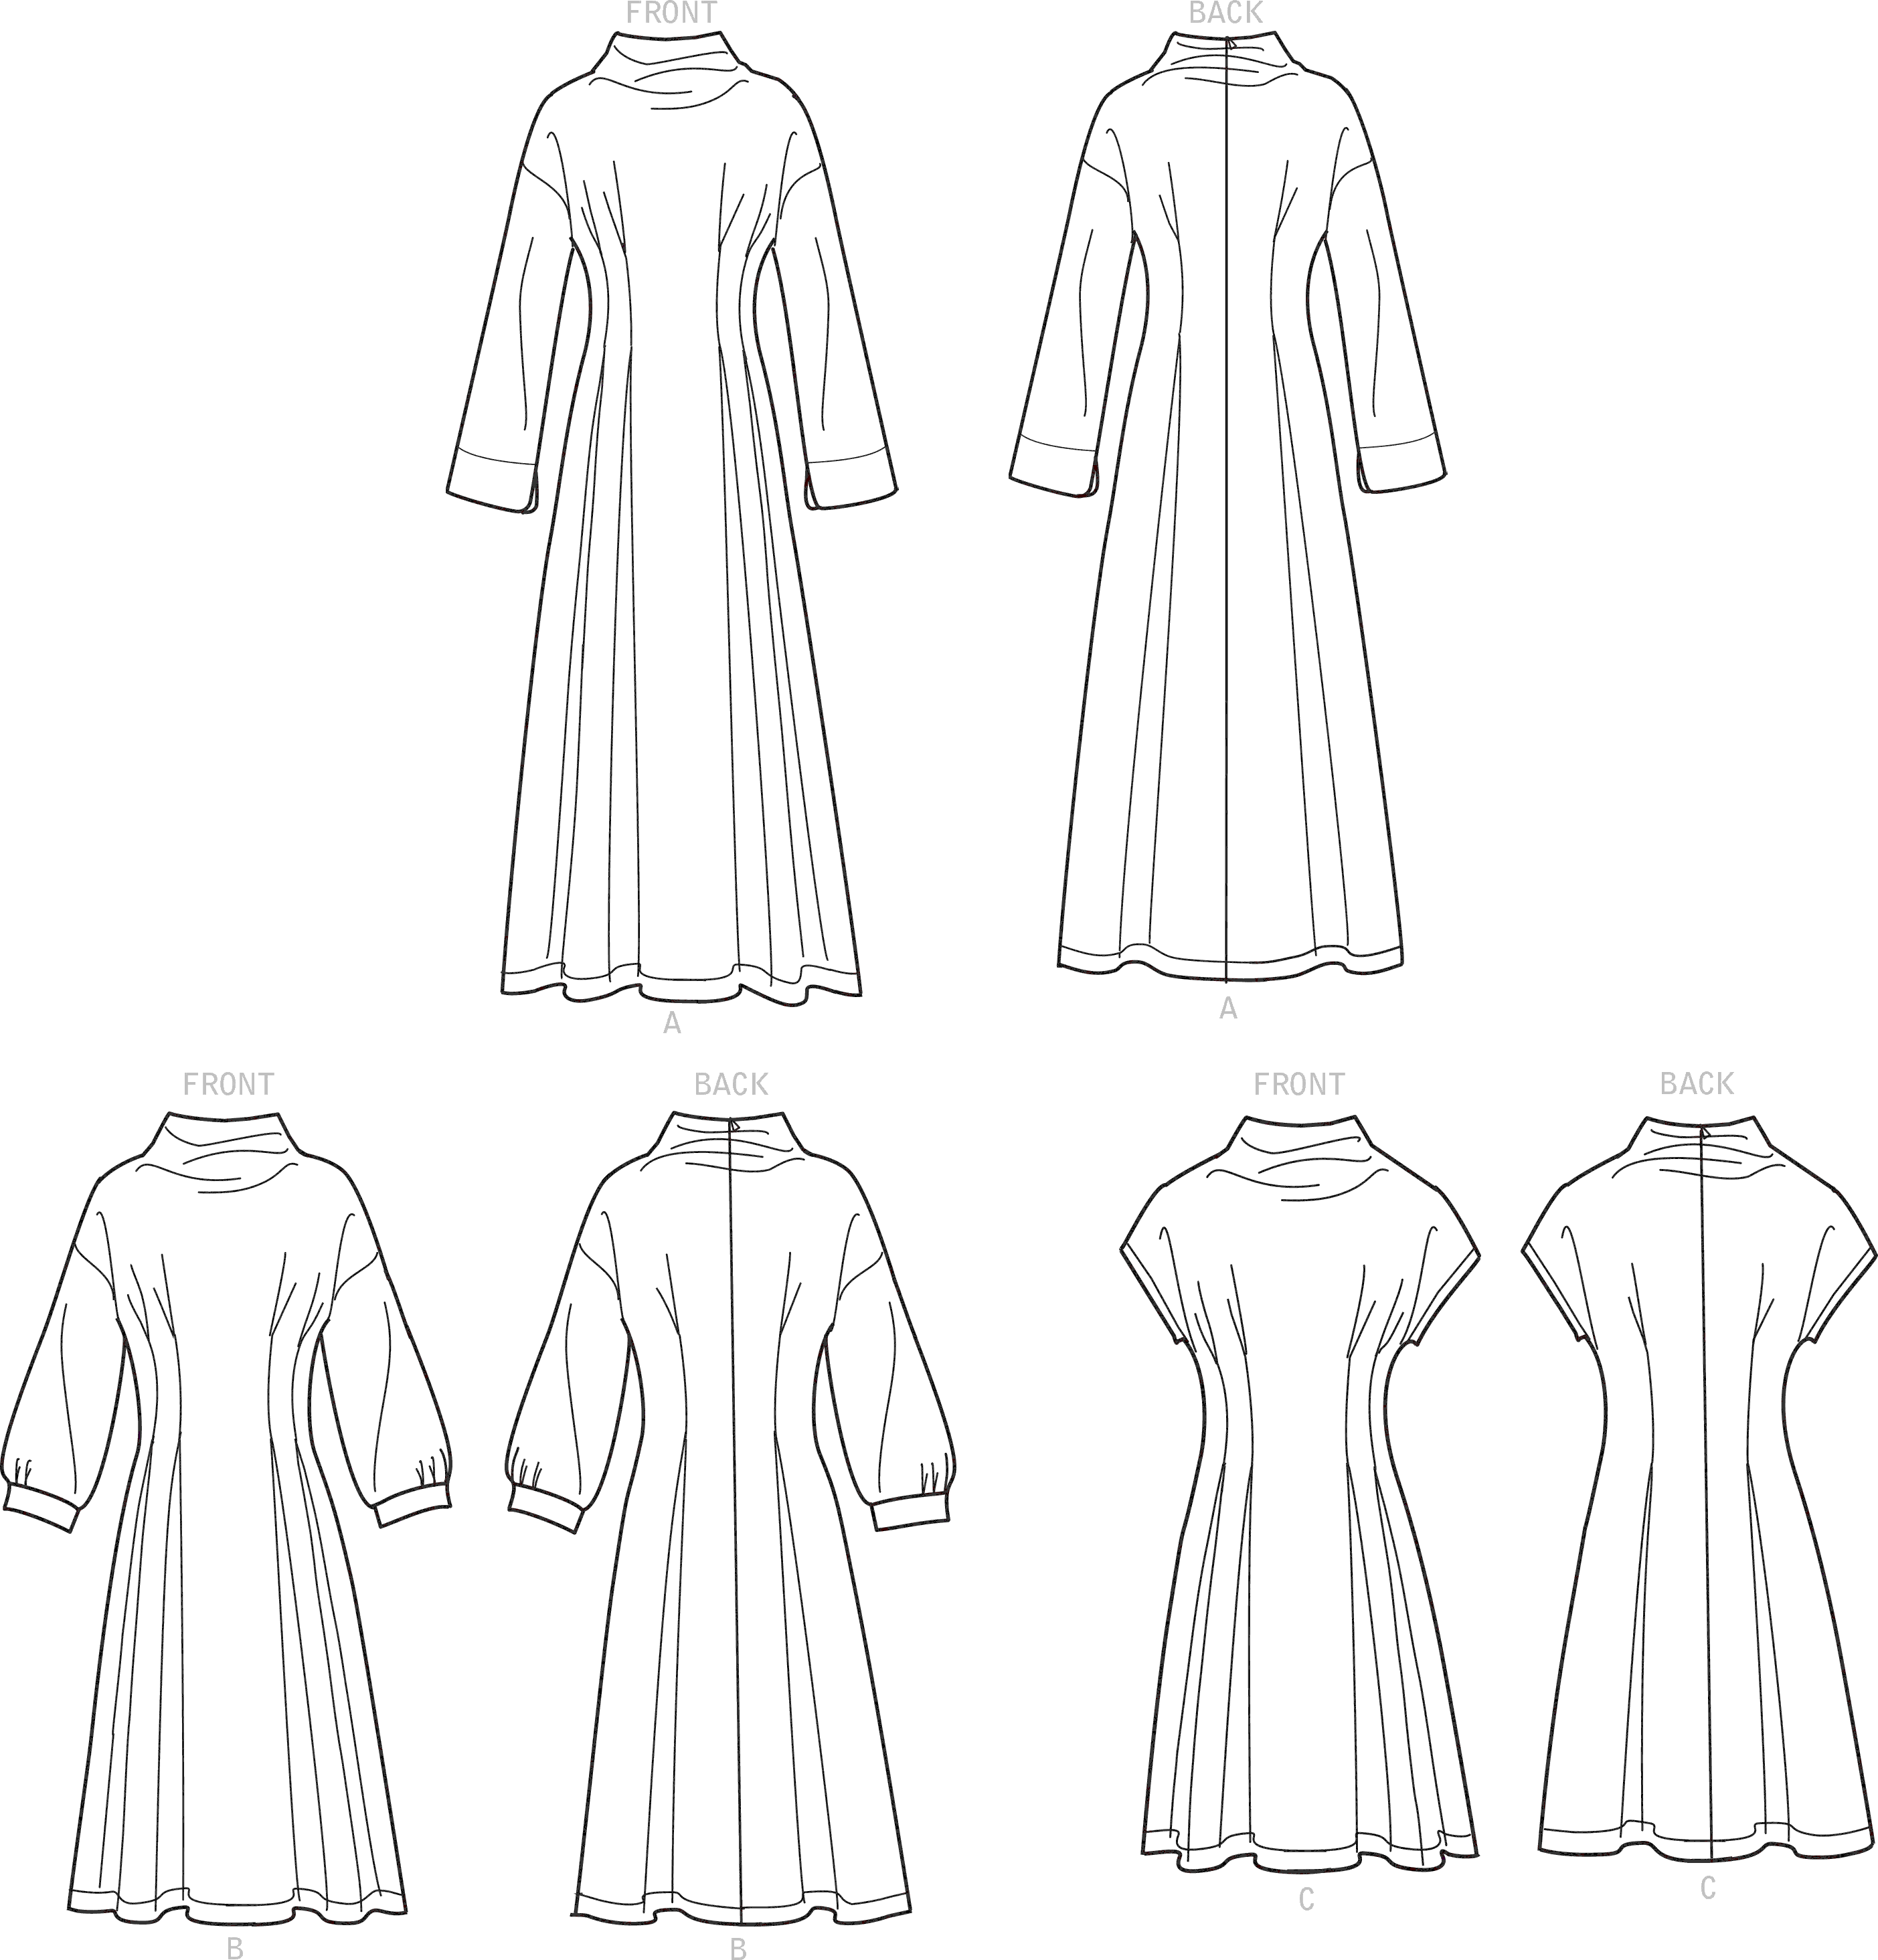 Simplicity Sewing Pattern S9174 Misses Knit Dress 9174 Line Art From Patternsandplains.com